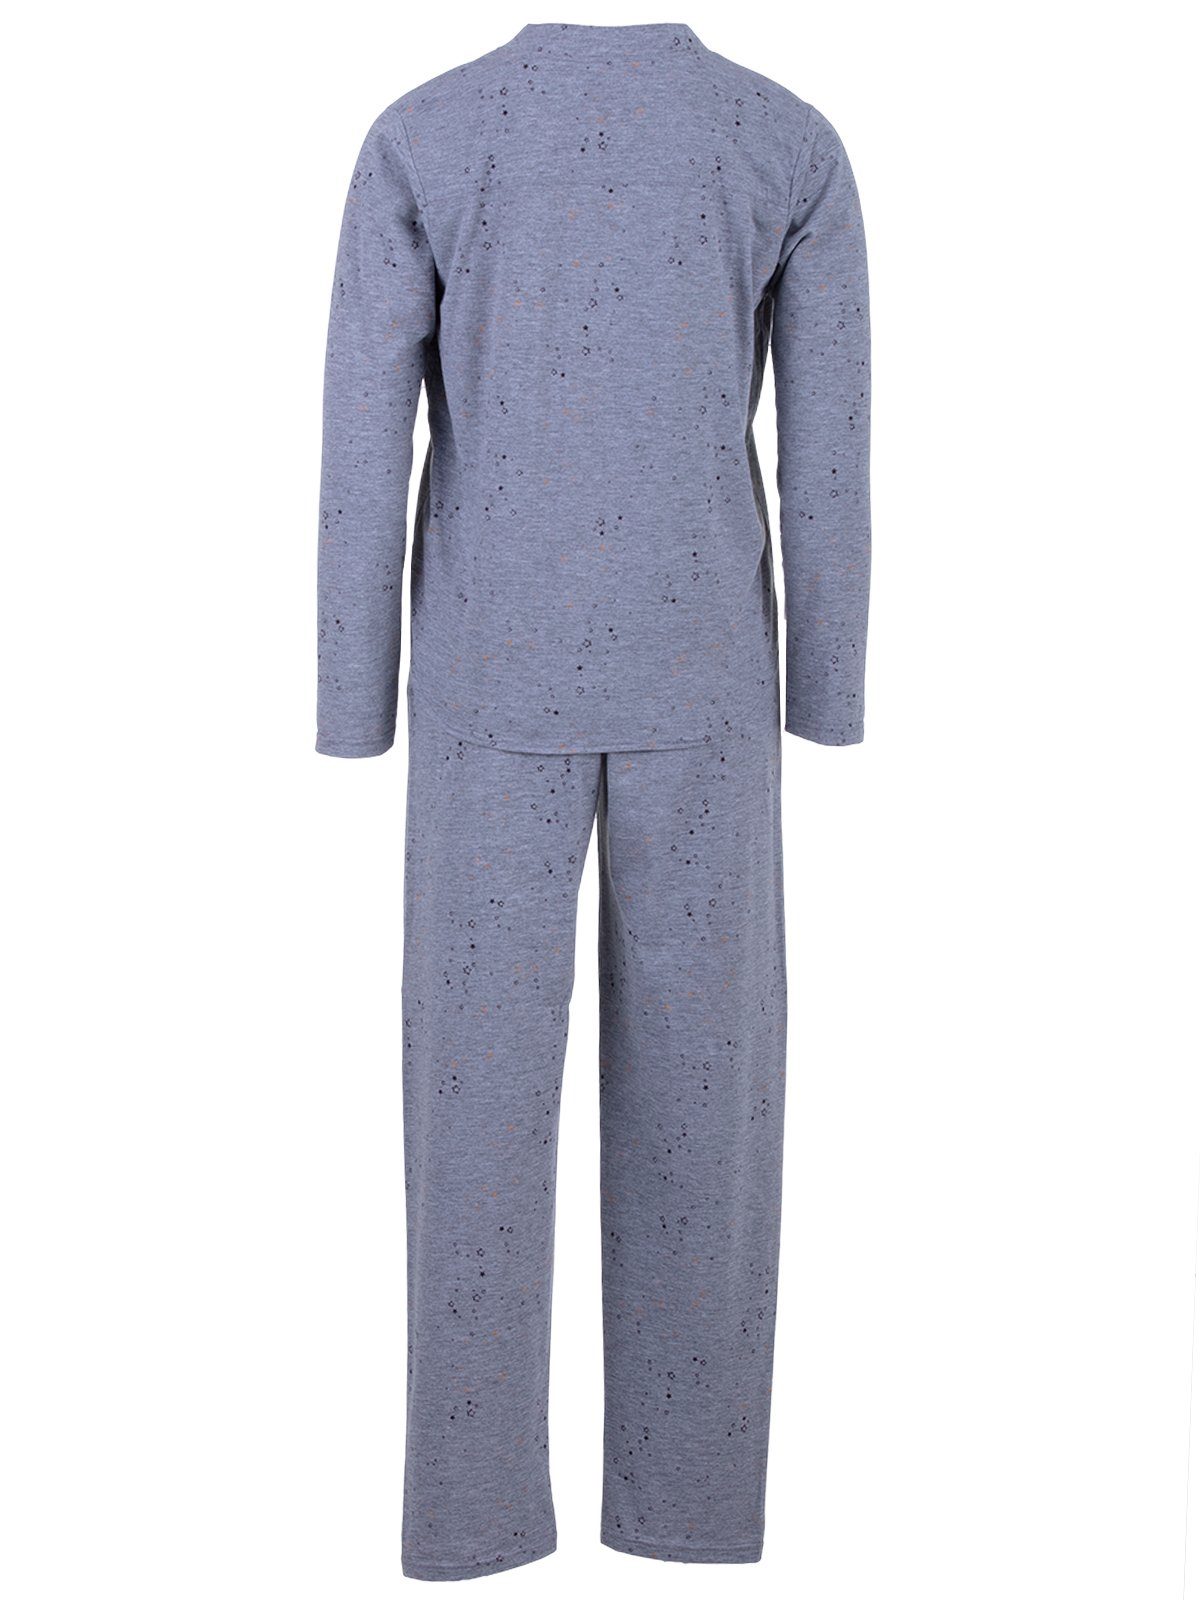 Langarm Sterne Schlafanzug Pyjama zeitlos - grau Set